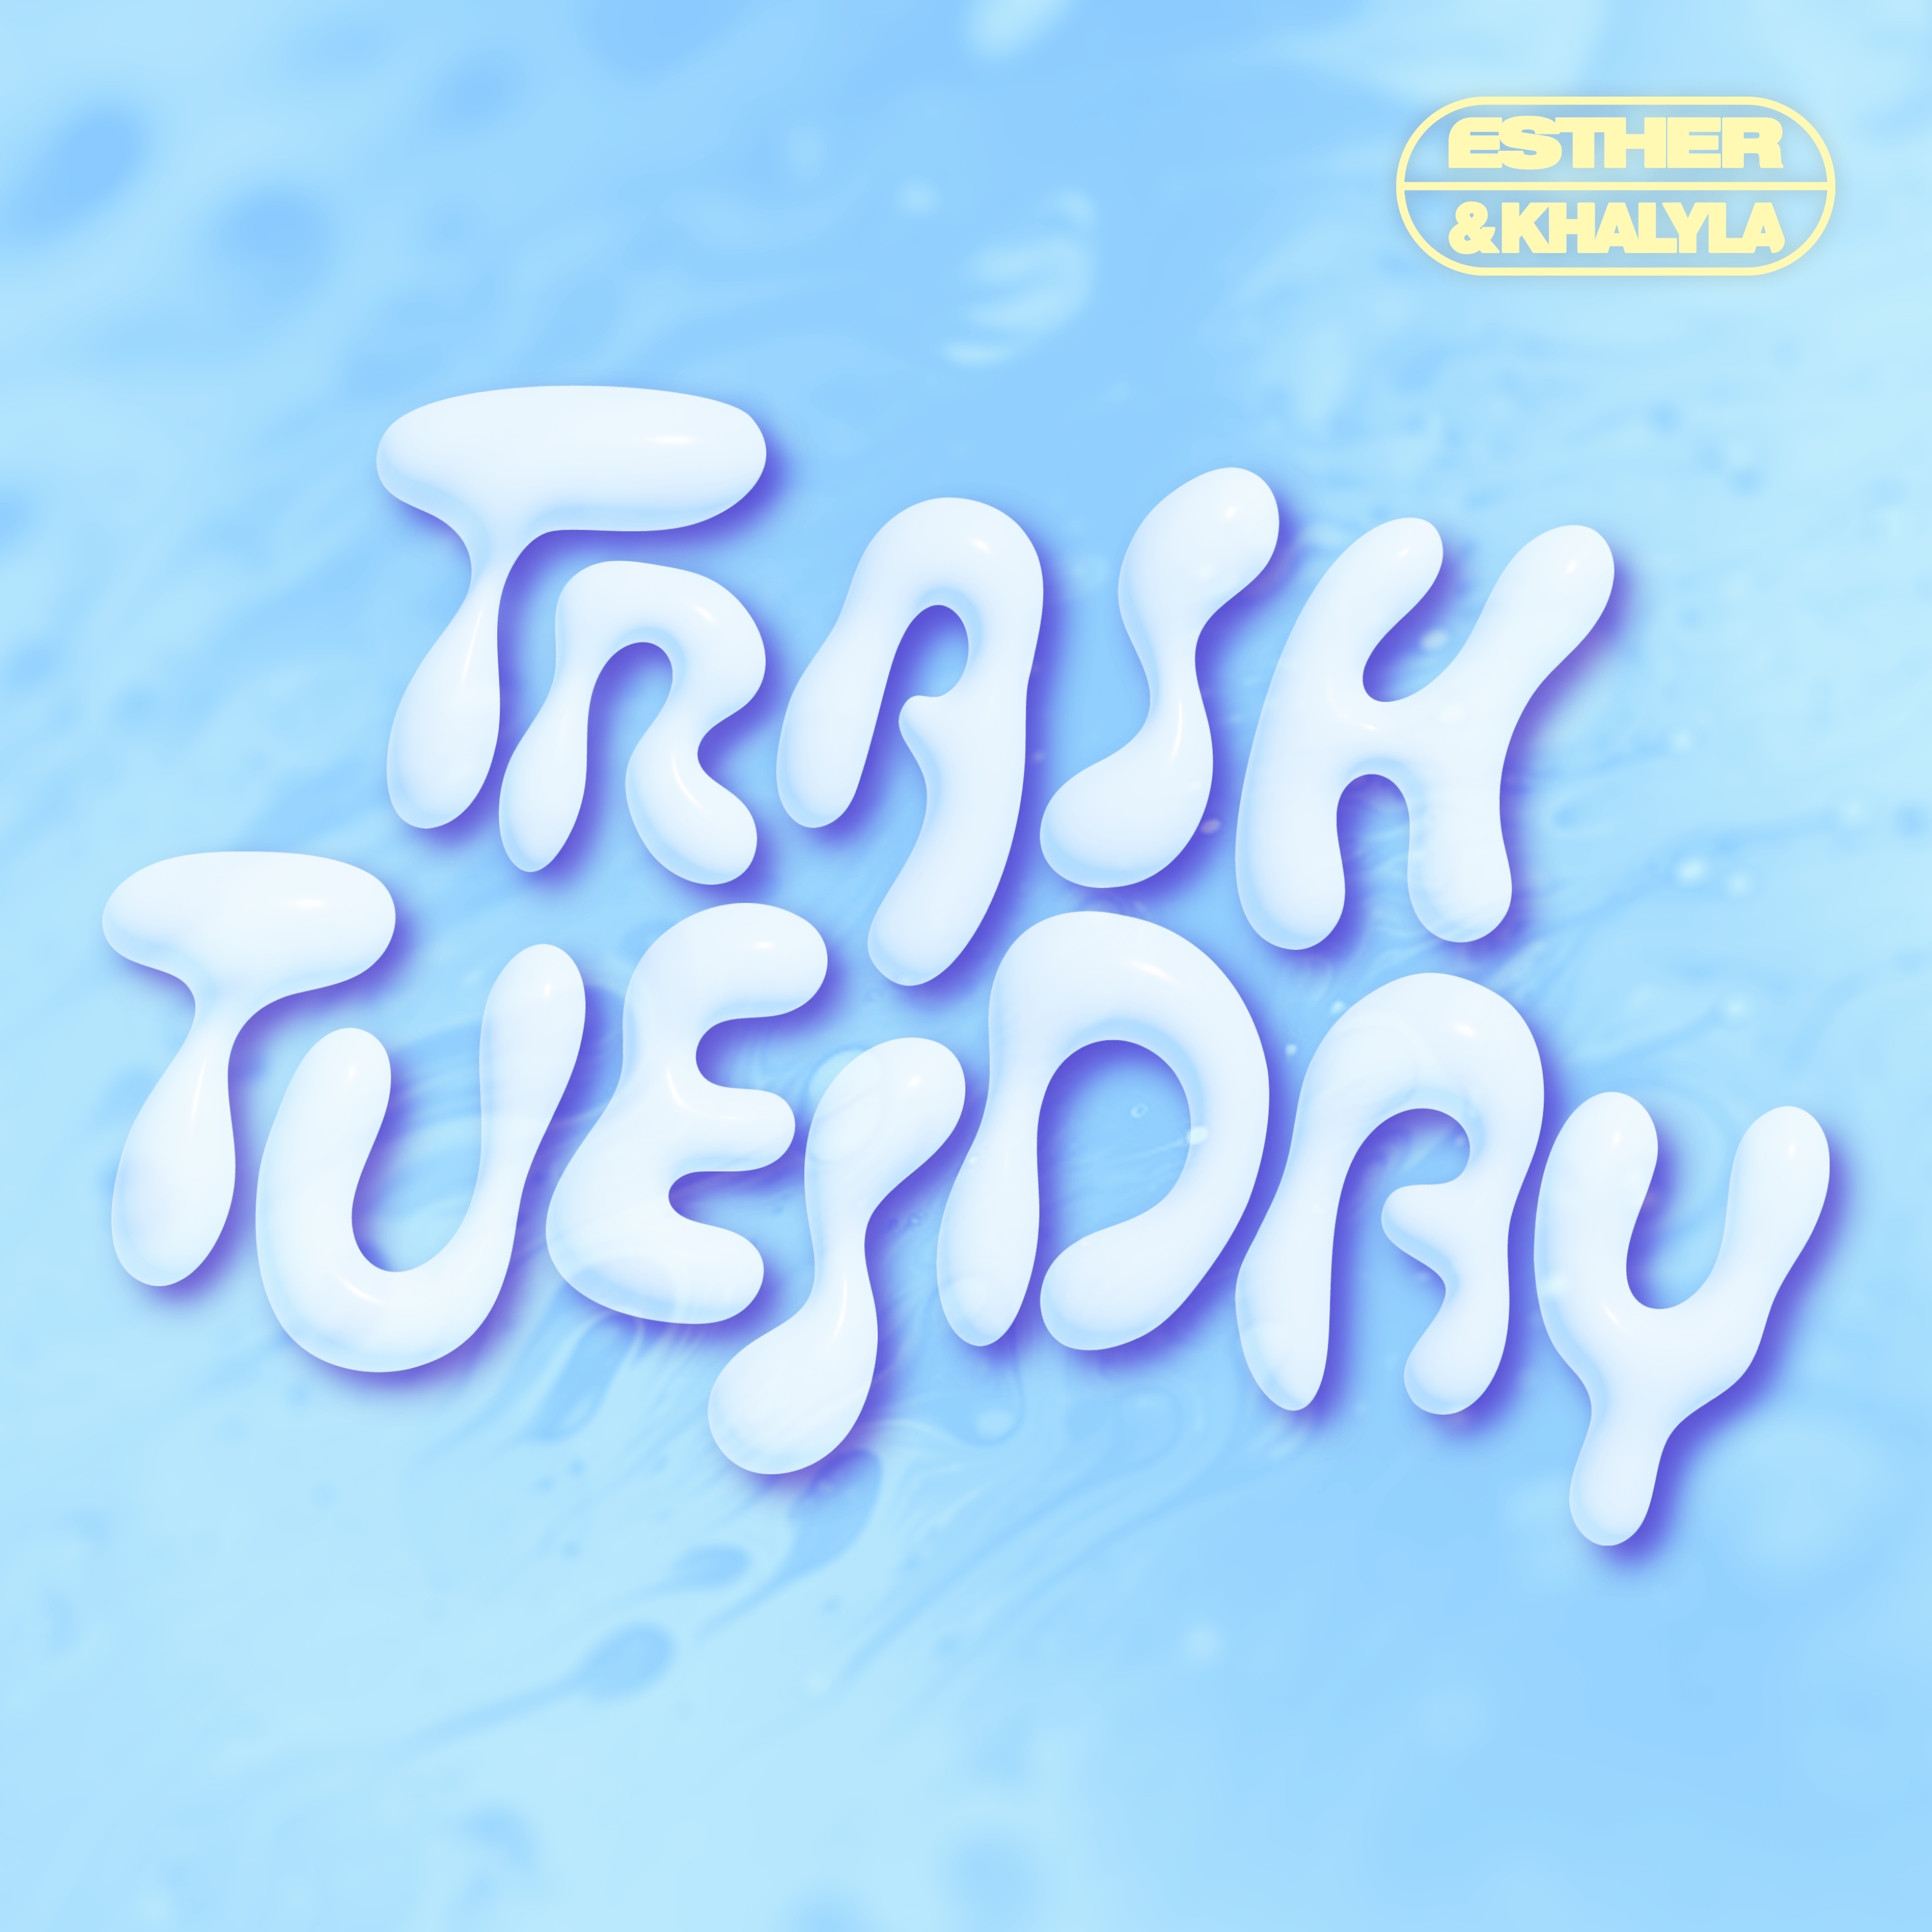 Trash Tuesday w/Esther & Khalyla podcast show image